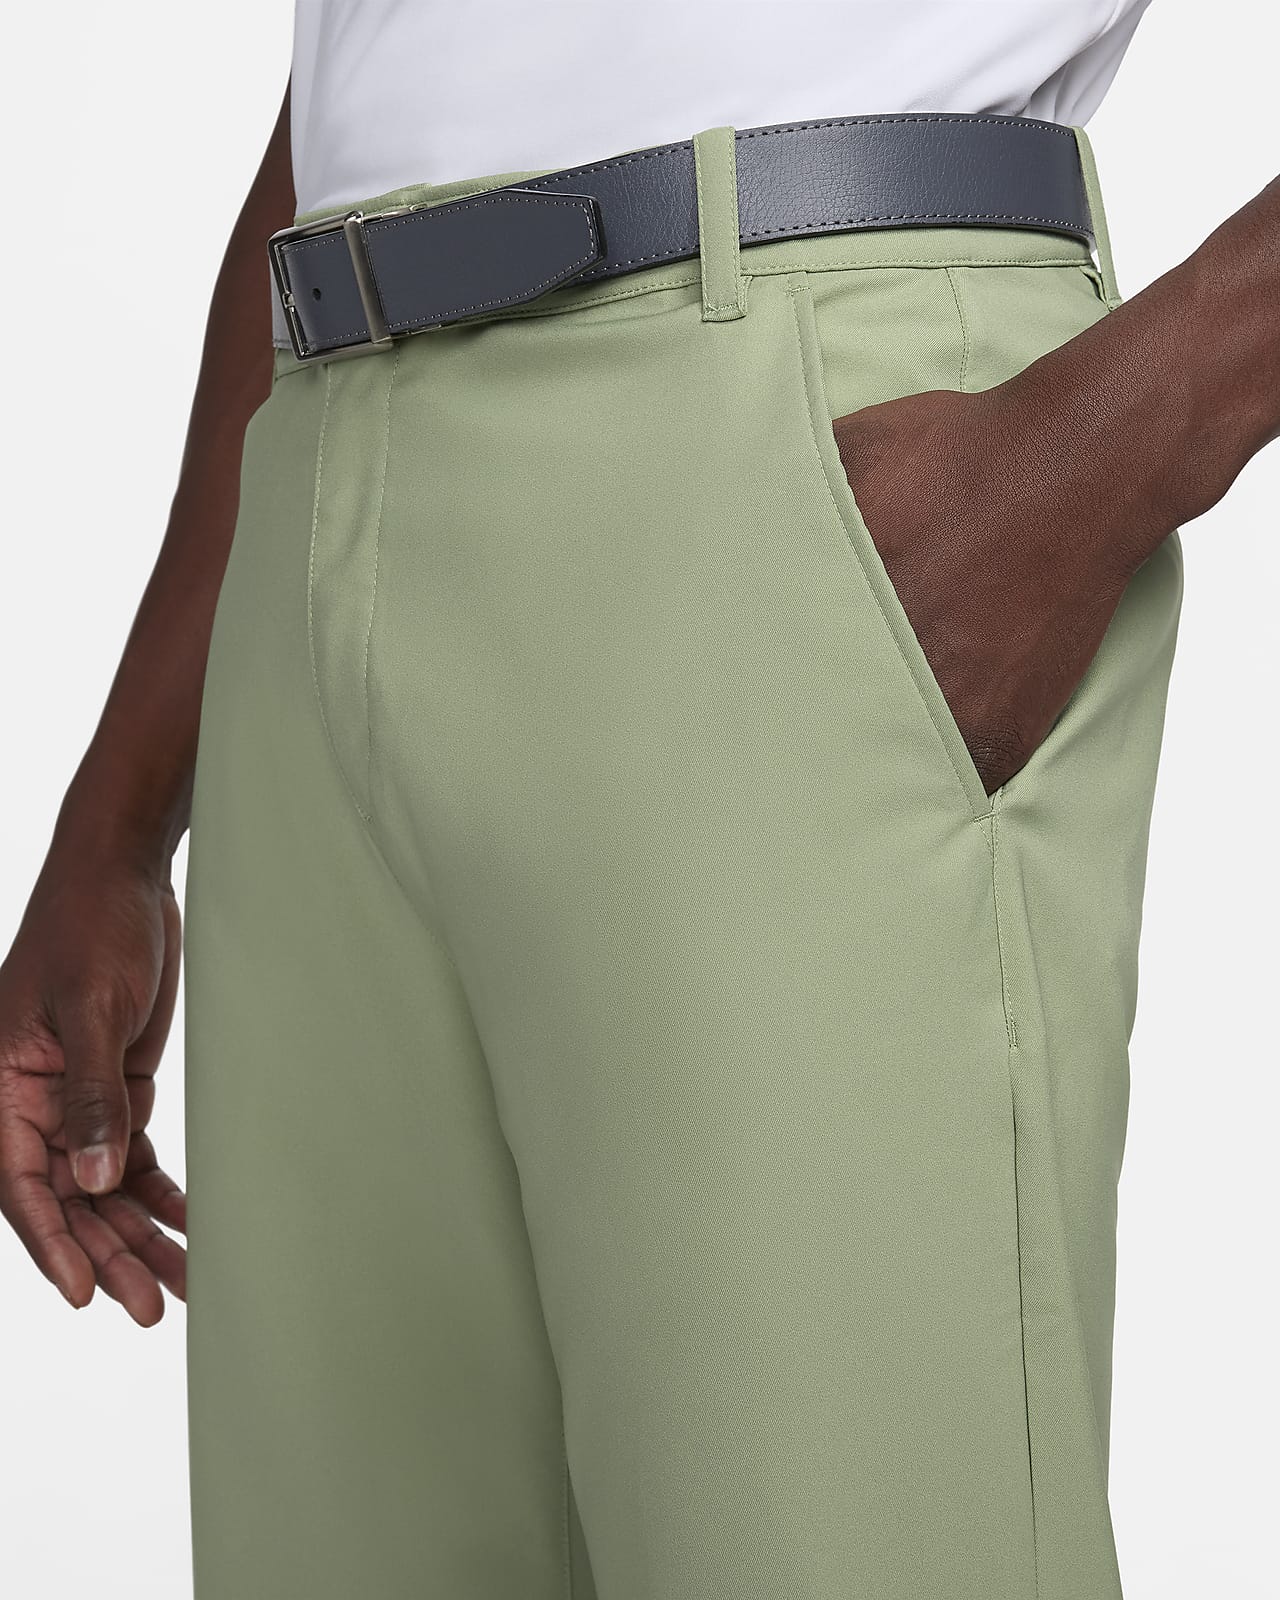 Nike, Dri-FIT Victory Men's Golf Pants